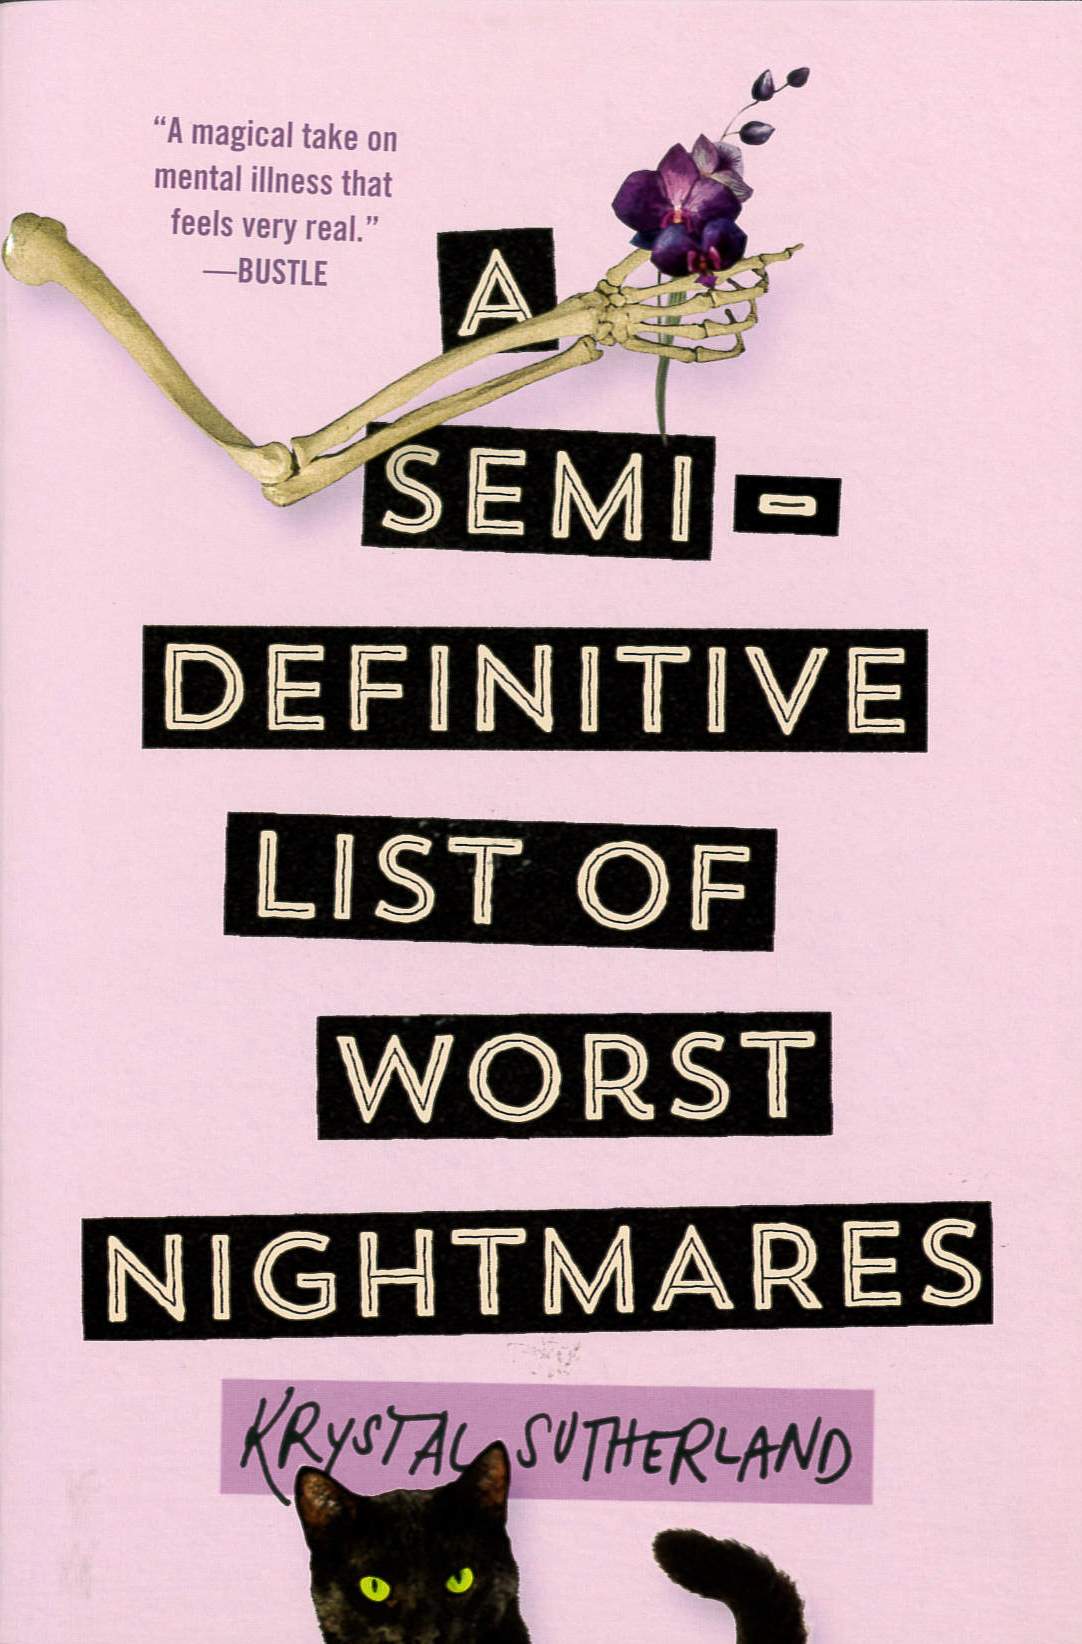 A semi-definitive list of worst nightmares /